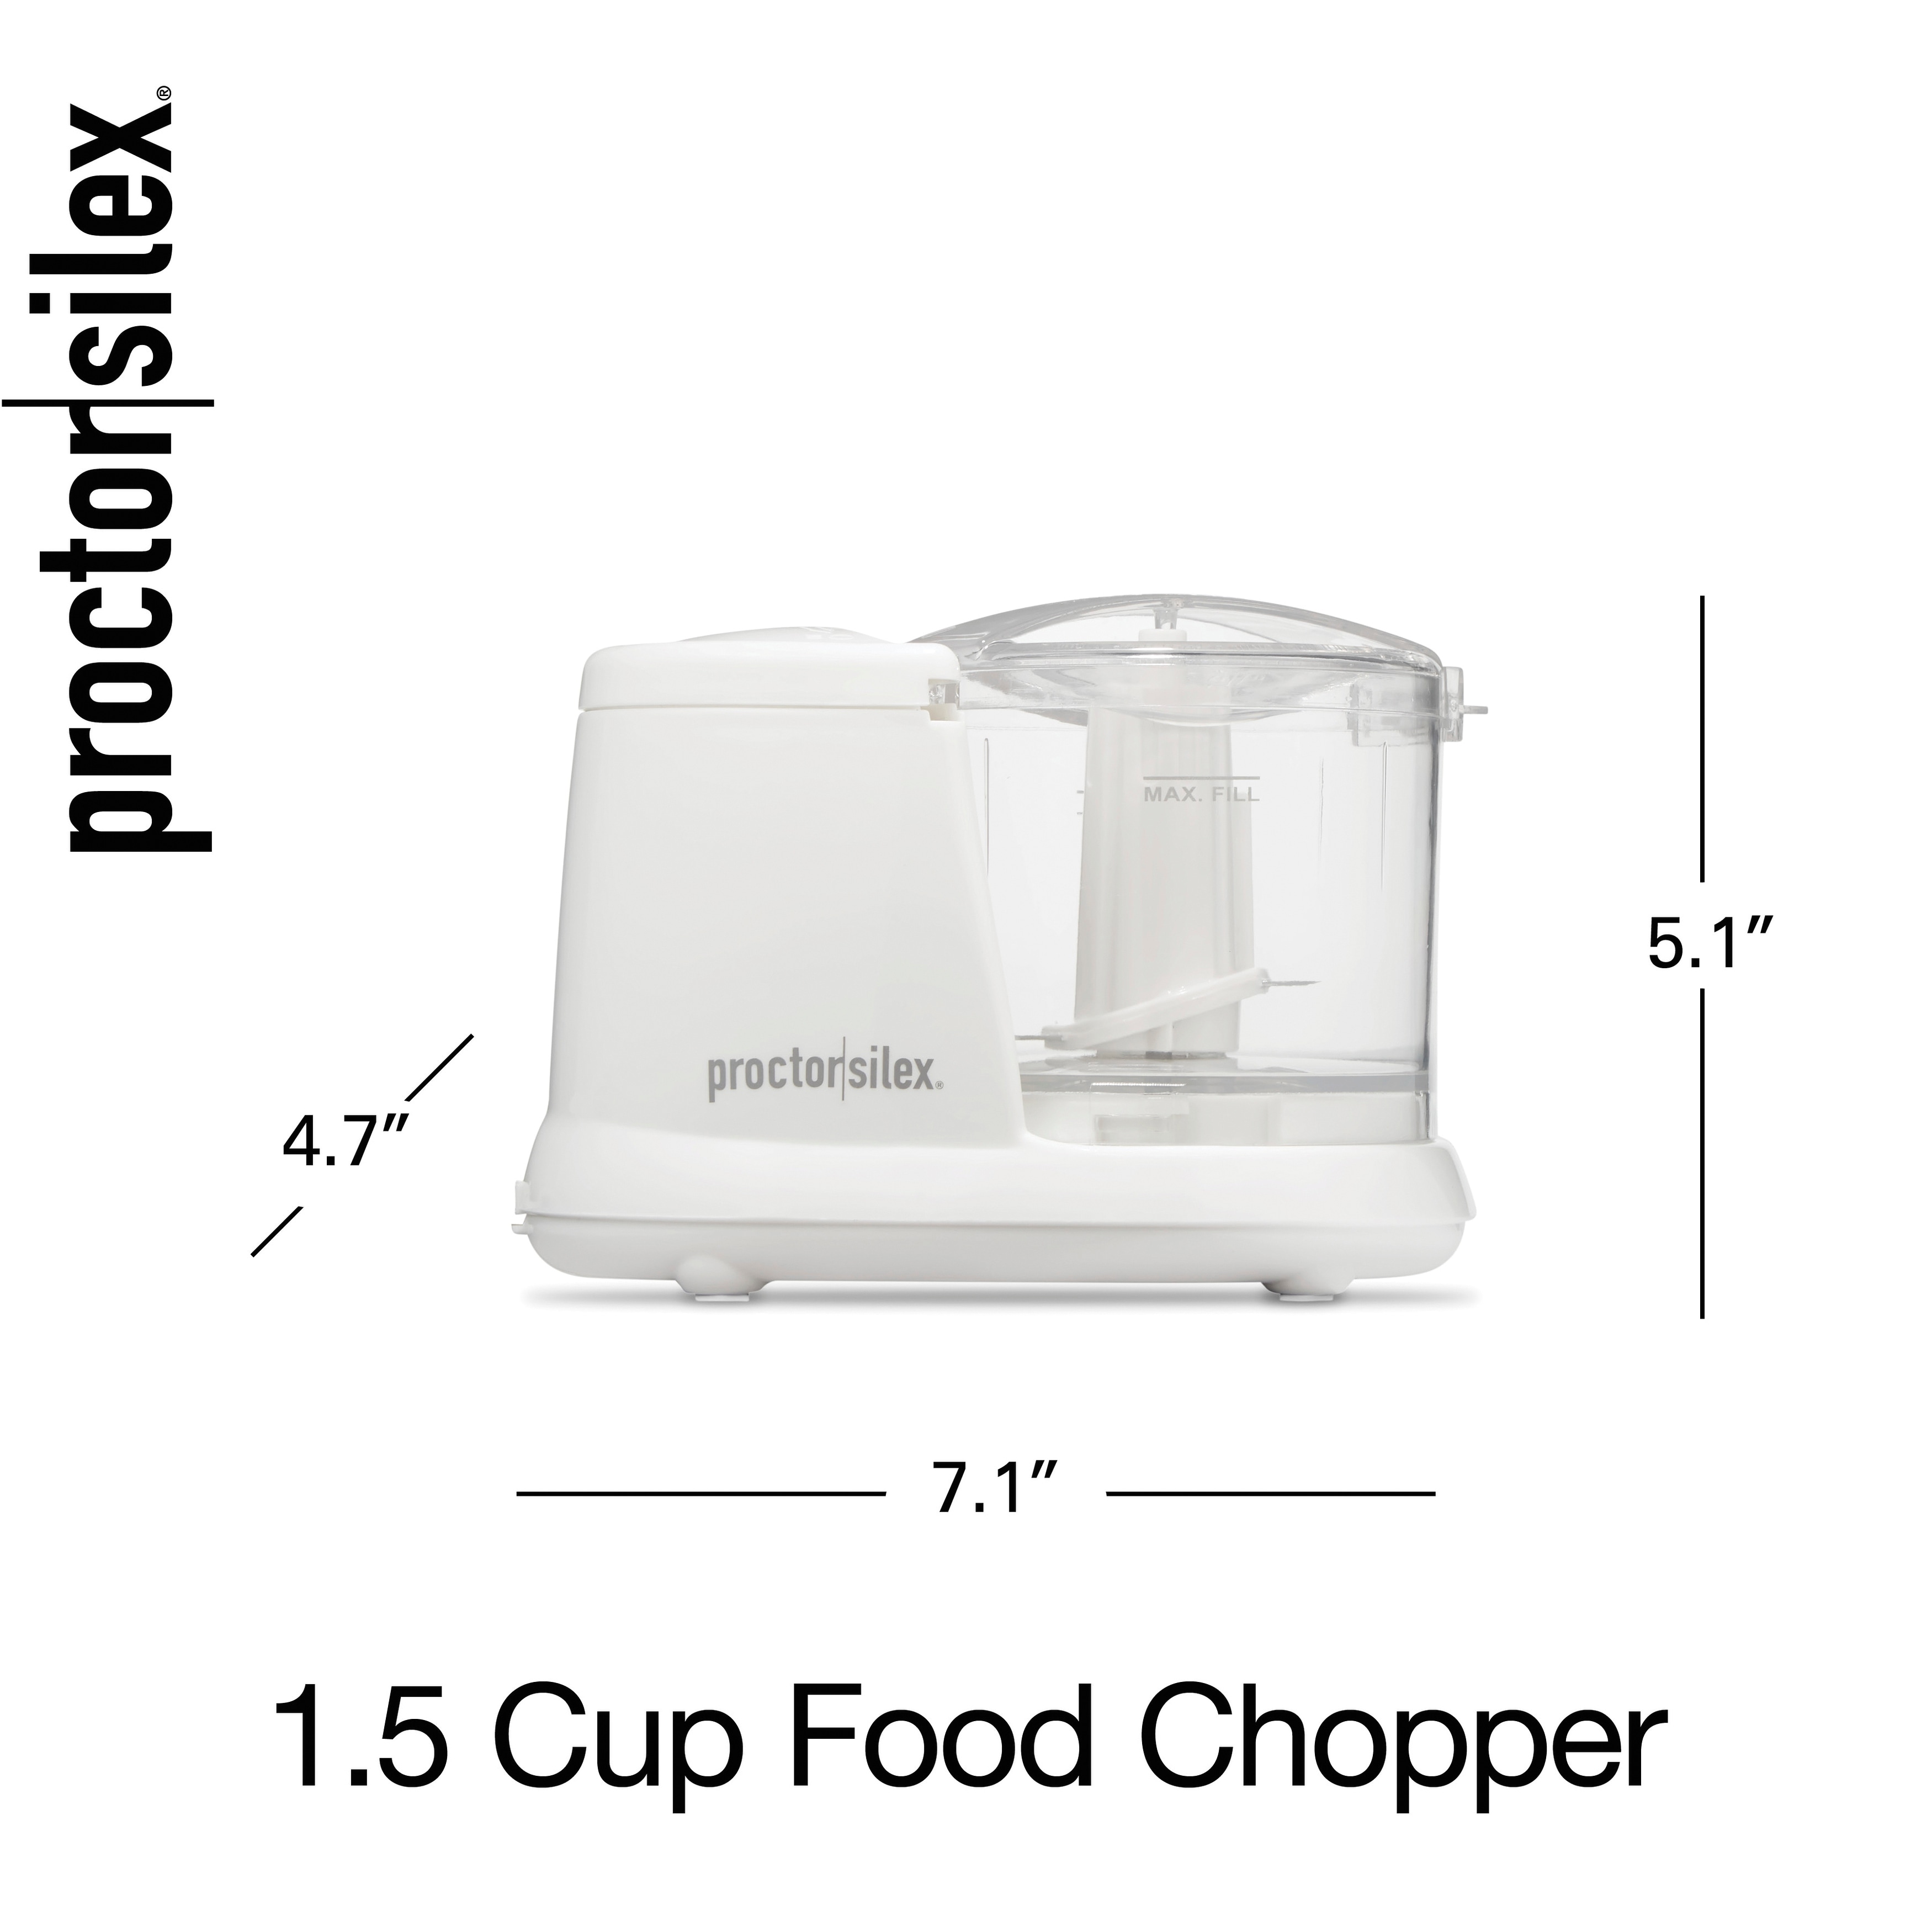 https://ak1.ostkcdn.com/images/products/is/images/direct/eda457d2a68baf2a4dff54d5263bda7de5cf6229/Proctor-Silex-White-1.5-Cup-Food-Chopper.jpg